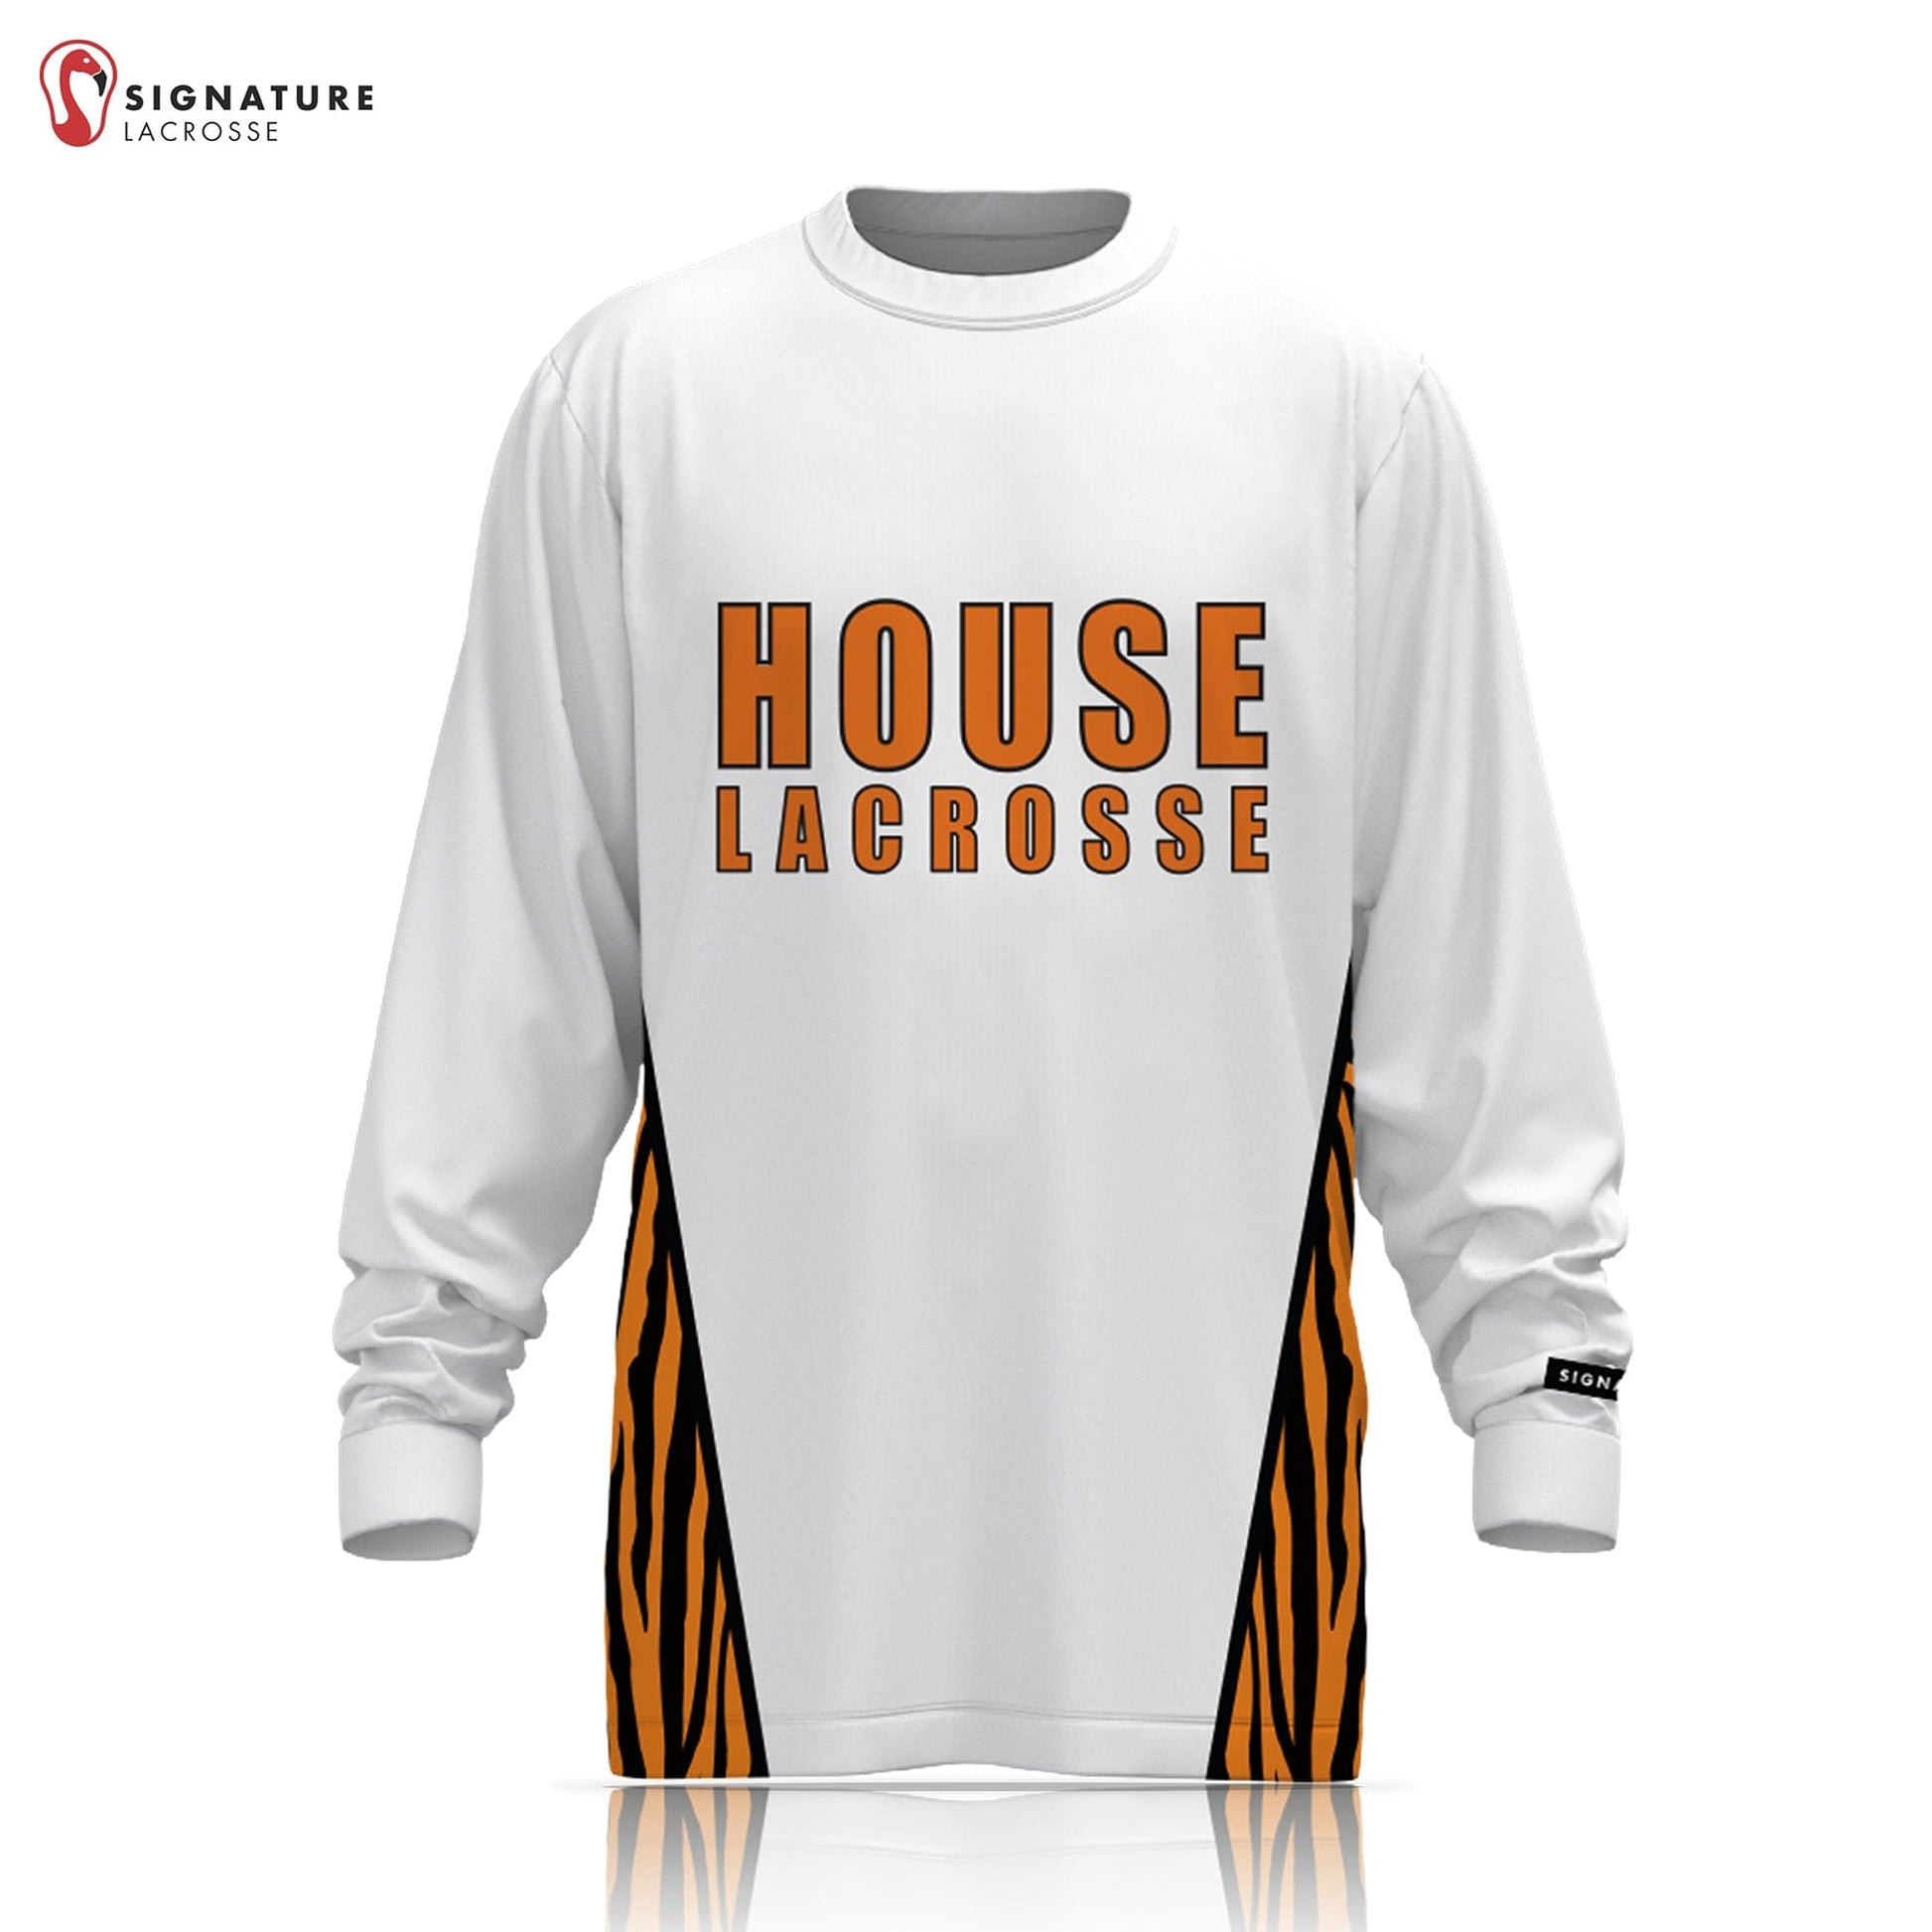 House of Sports Girls Lacrosse Pro Long Sleeve Shooting Shirt:2026 Signature Lacrosse